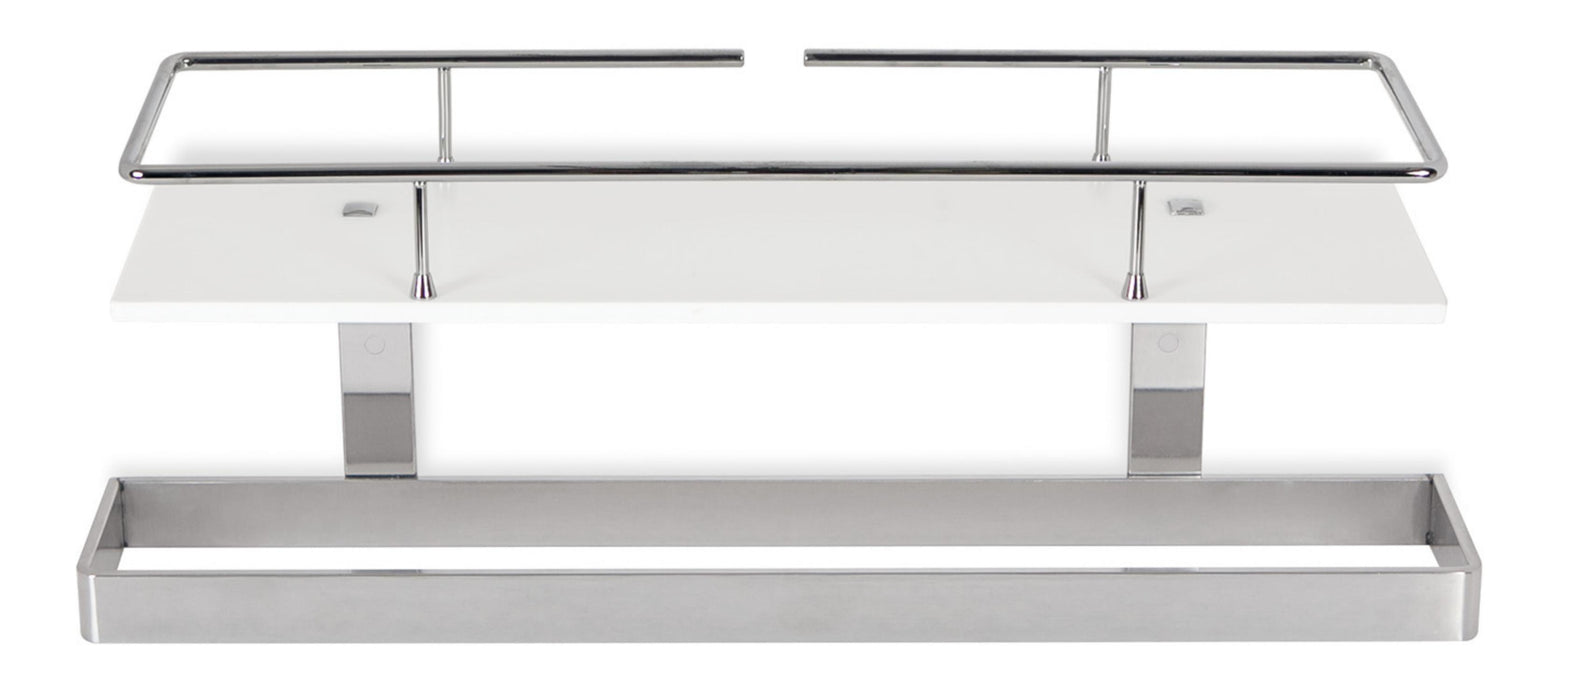 BELTRAN 10803 TURIN Shelf with Towel Bar C/ Defense Chrome/White